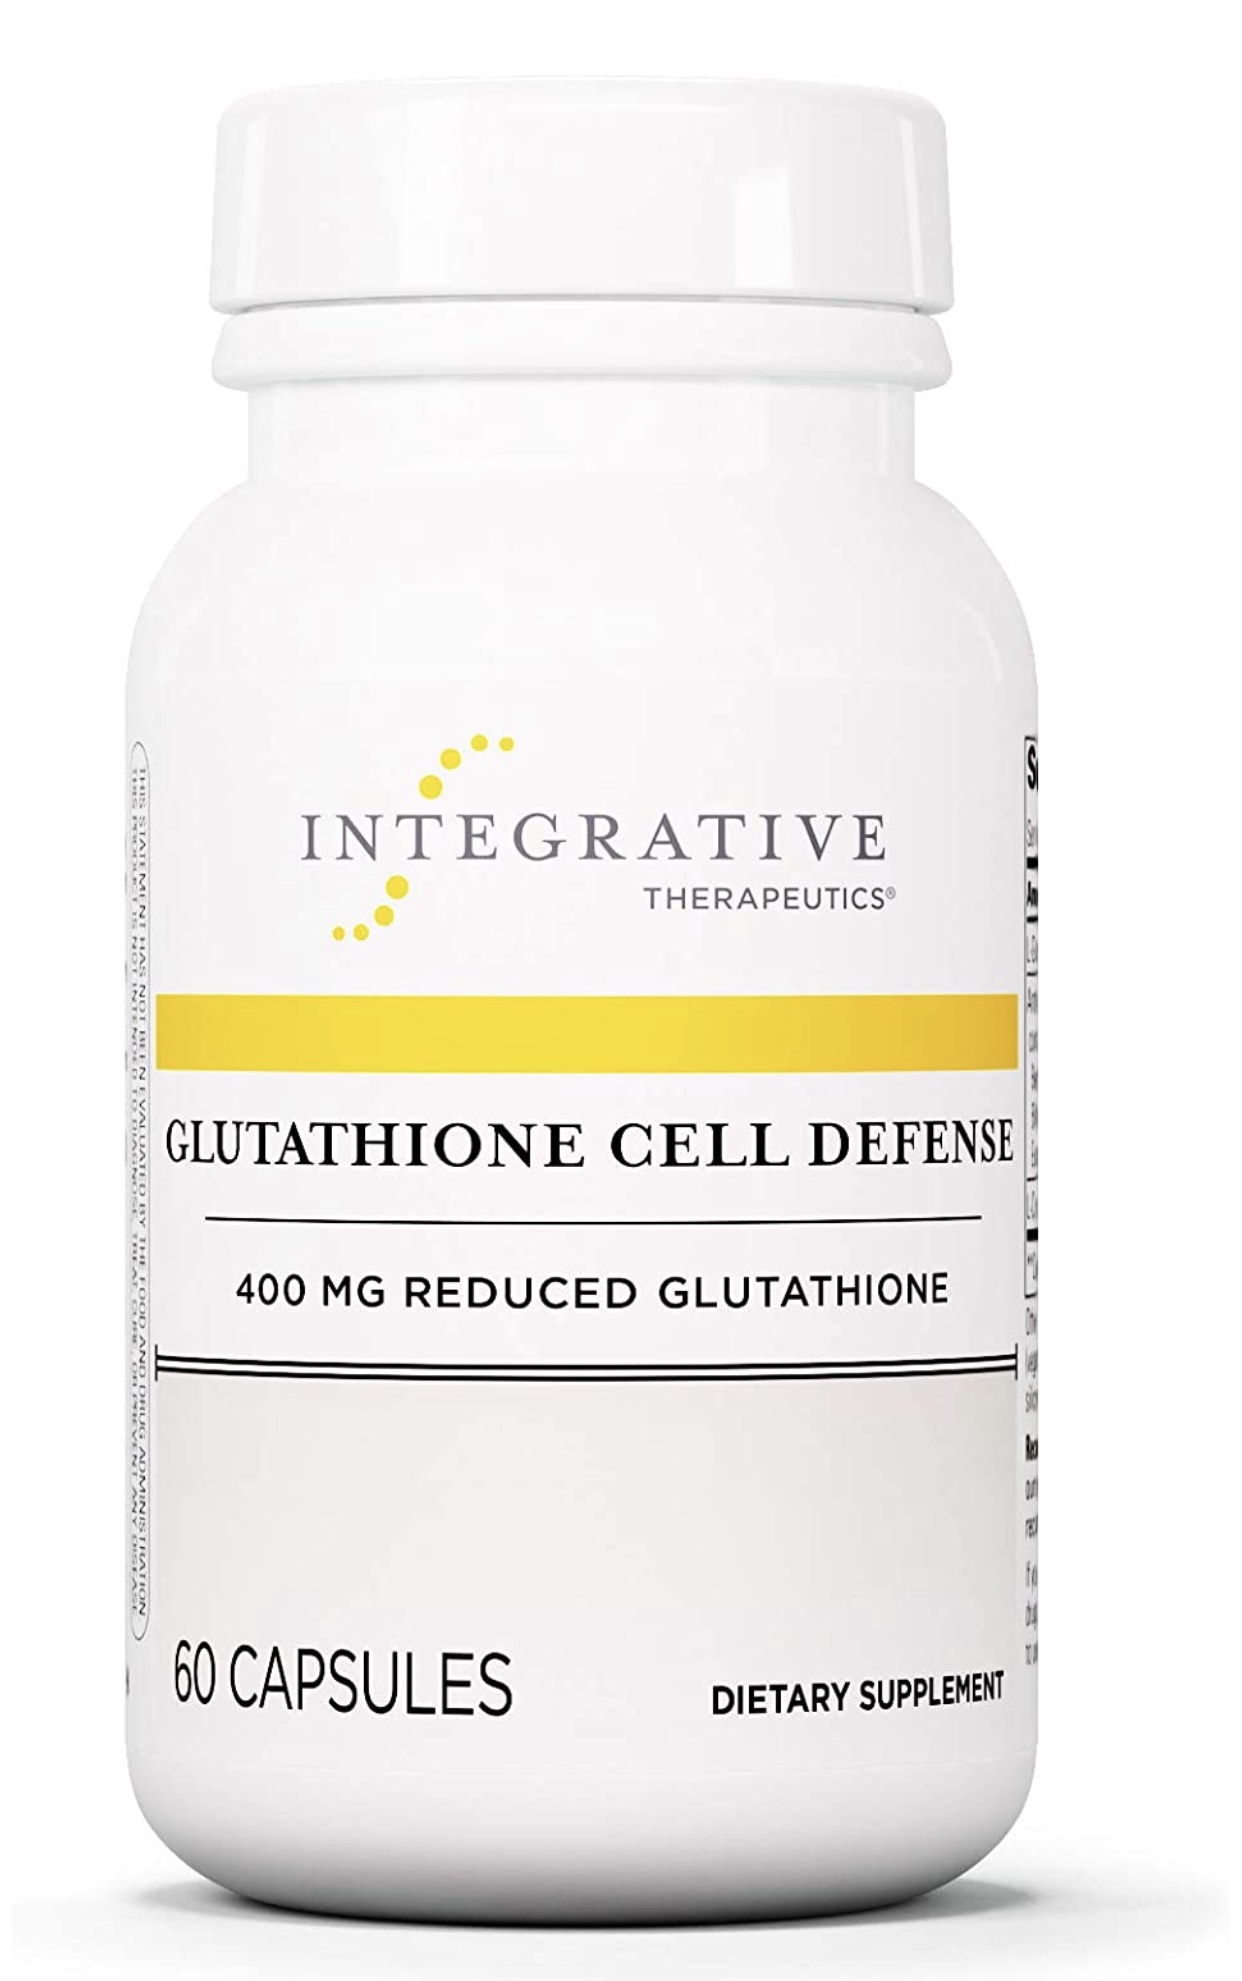 Glutathione cell defense